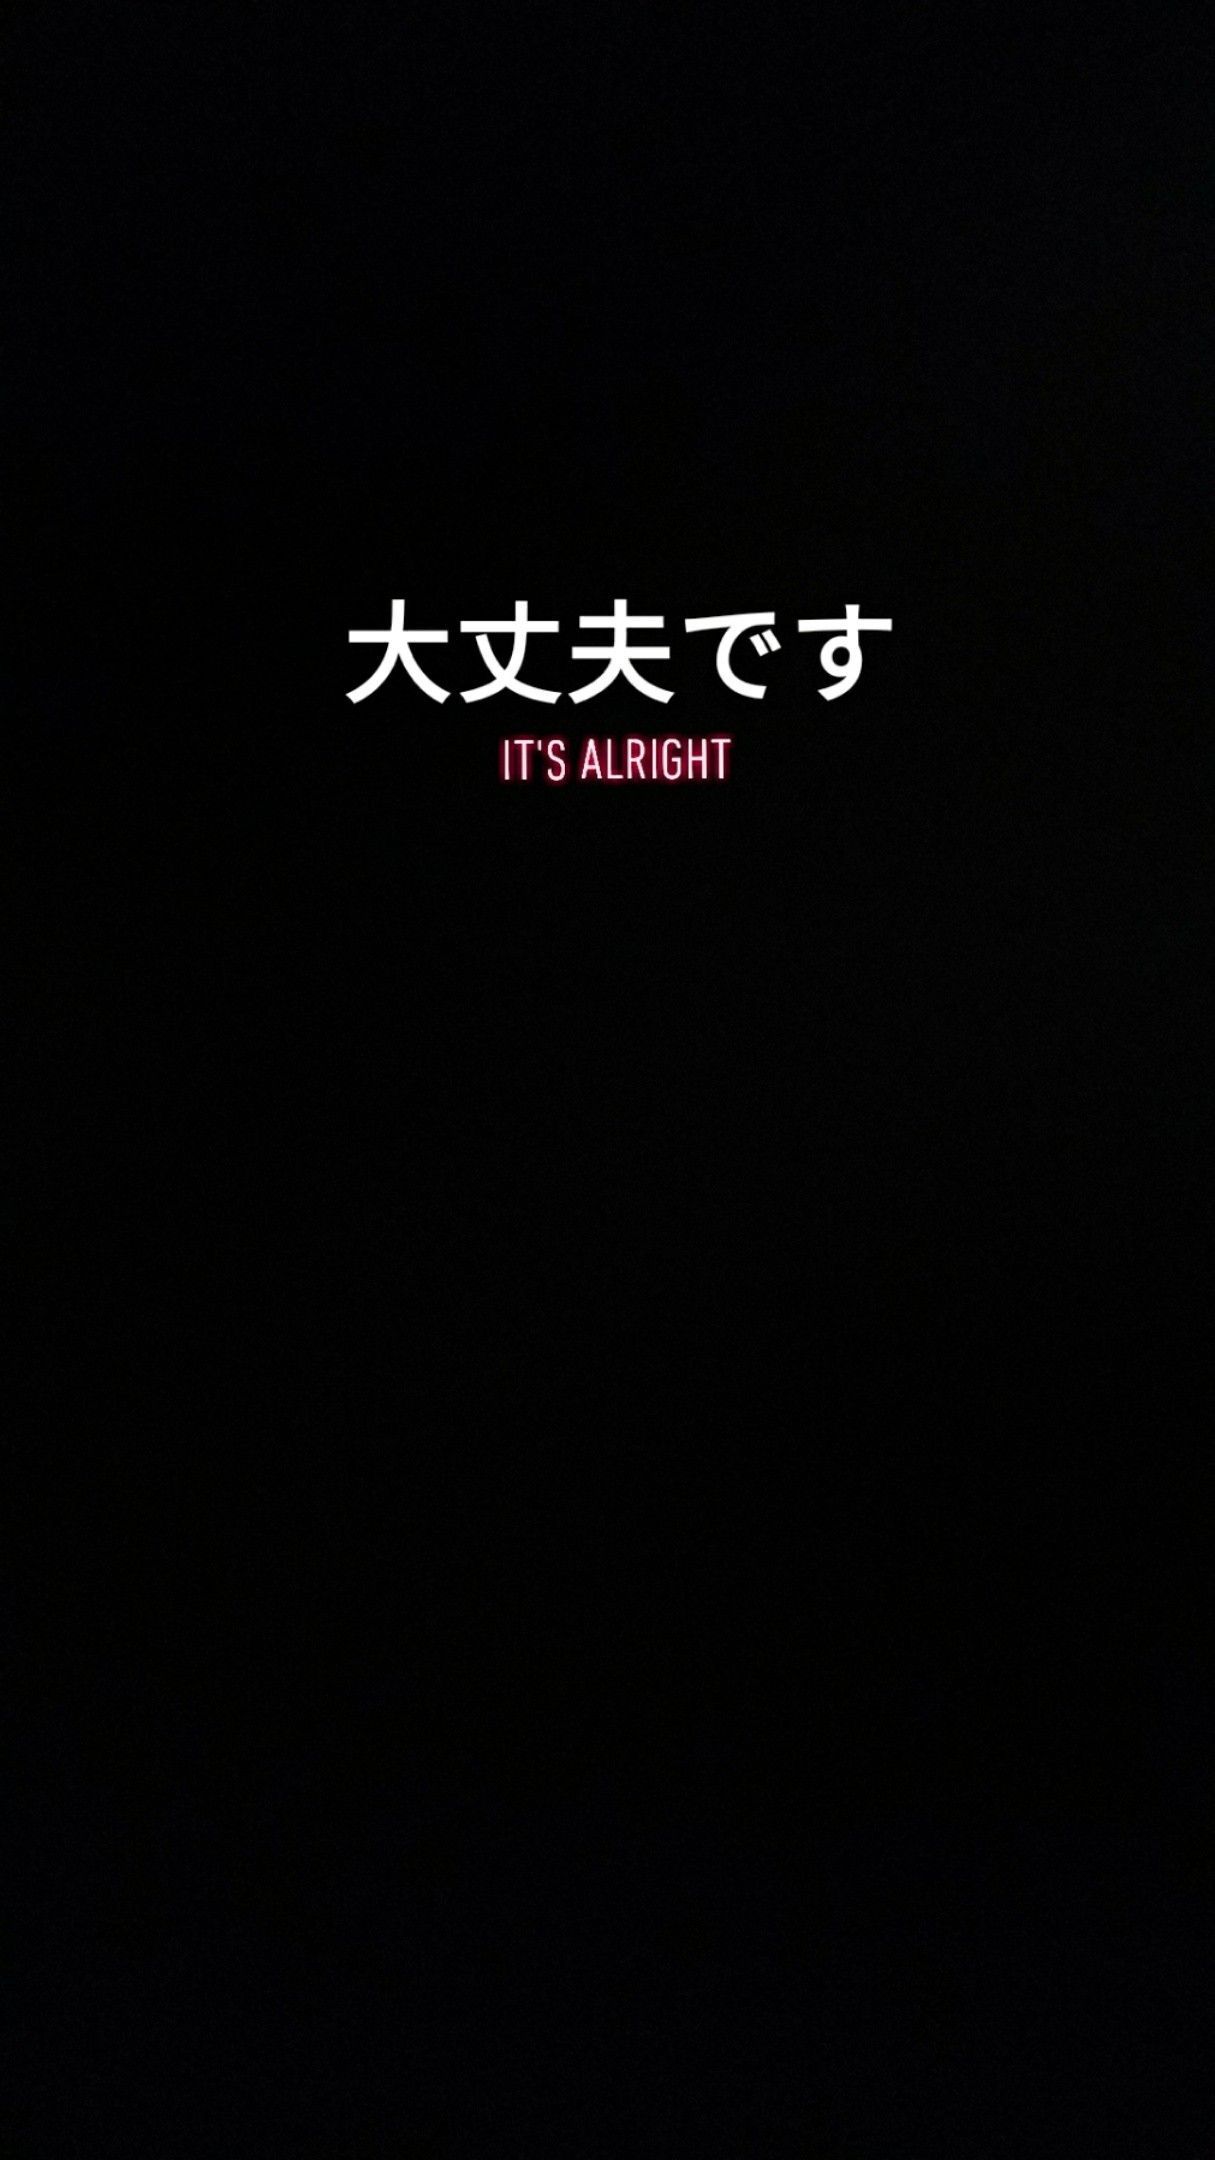 it's alright. Black aesthetic wallpaper, Japanese words aesthetic wallpaper, Aesthetic japan